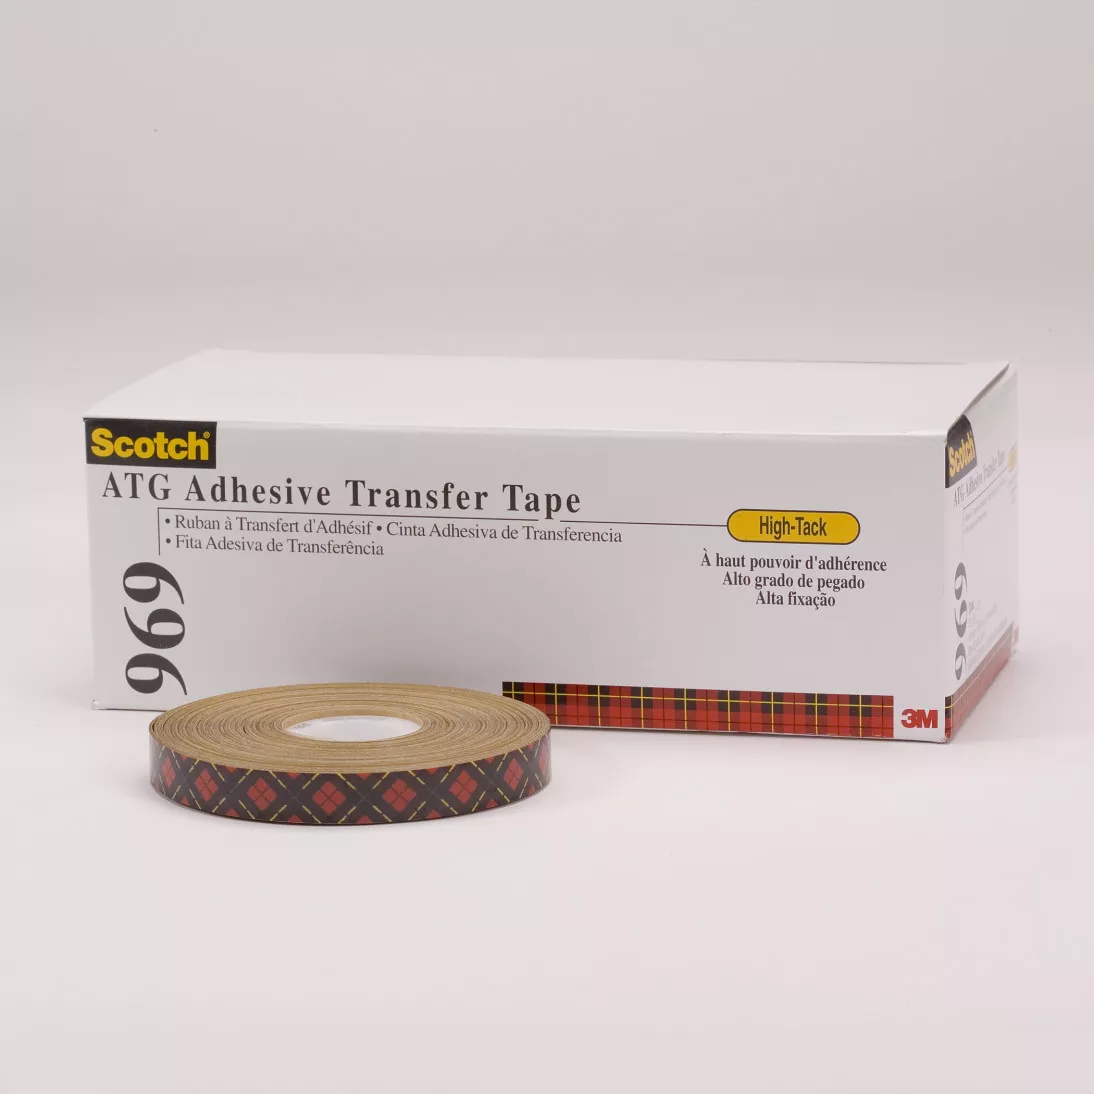 Scotch® ATG Adhesive Transfer Tape 969, Clear, 1/2 in x 18 yd, 5 mil,
PN6493, 12 rolls per inner, 6 inners per case